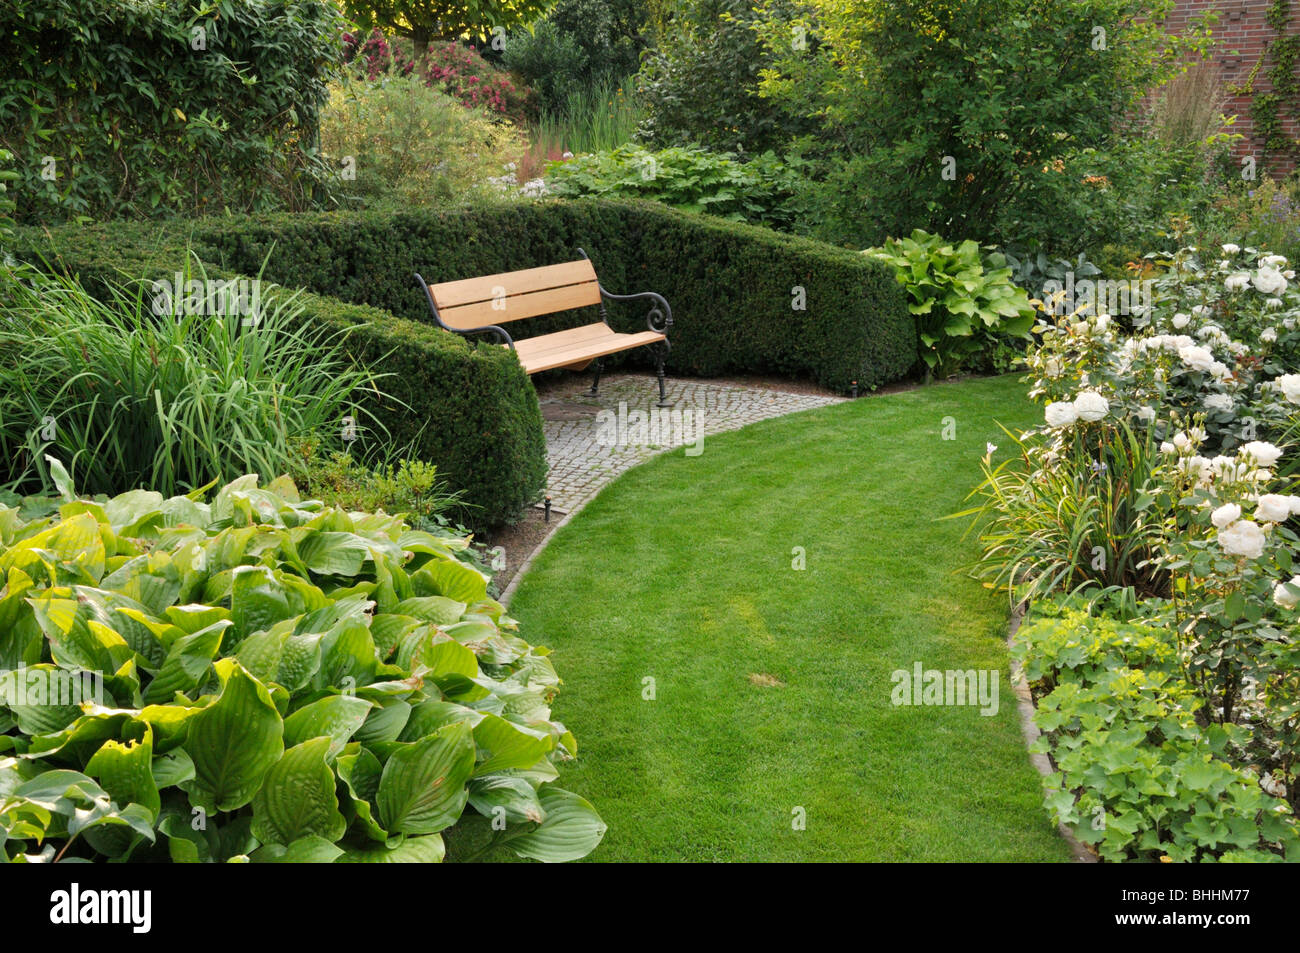 Grass path in a perennial garden with bench Stock Photo